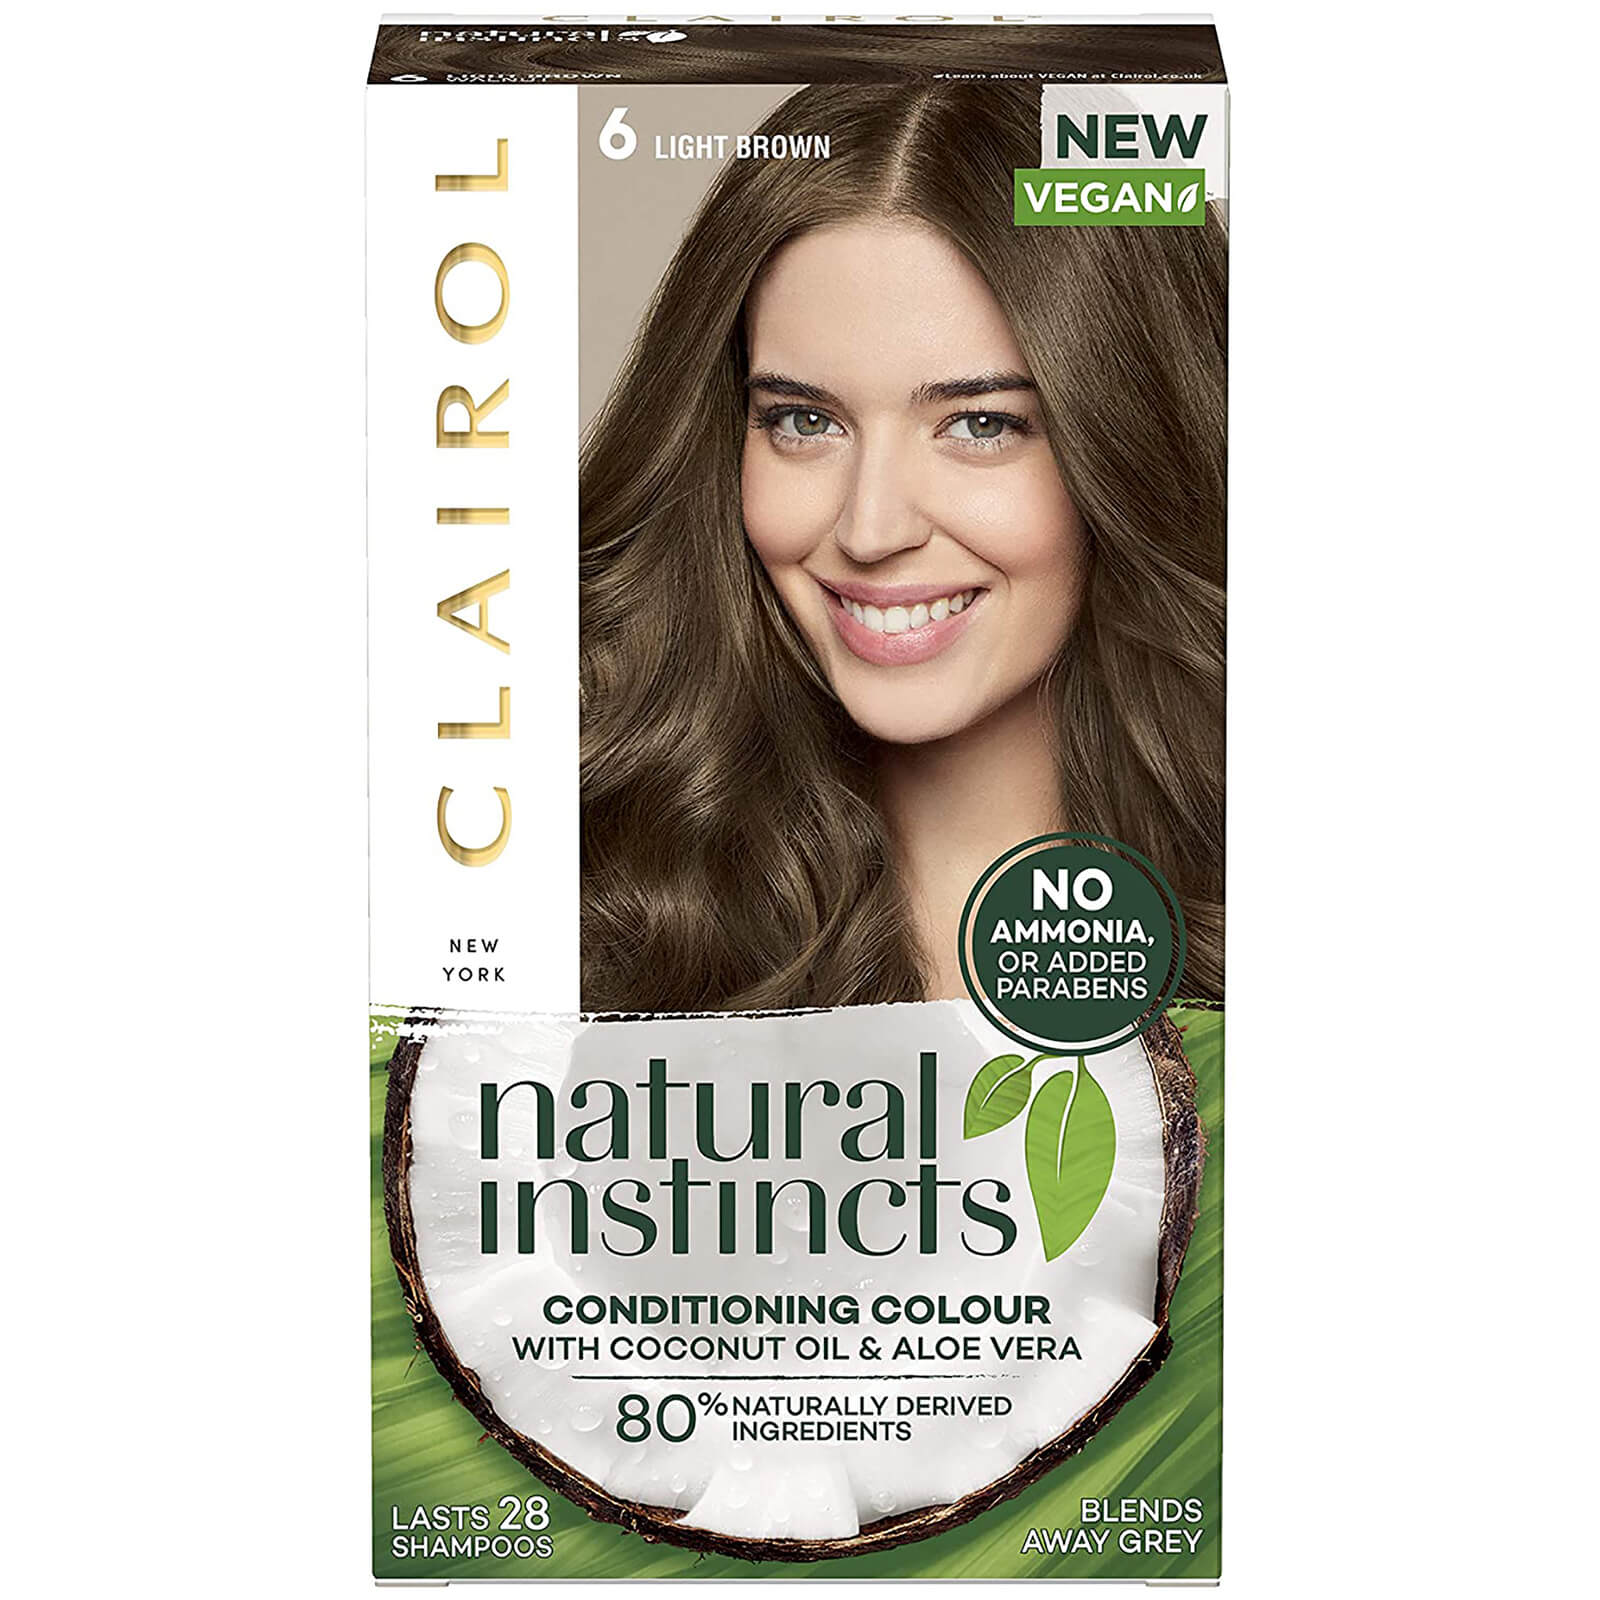 Clairol Natural Instincts Semi-Permanent No Ammonia Vegan Hair Dye 177ml (Various Shades) - 6 Light Brown